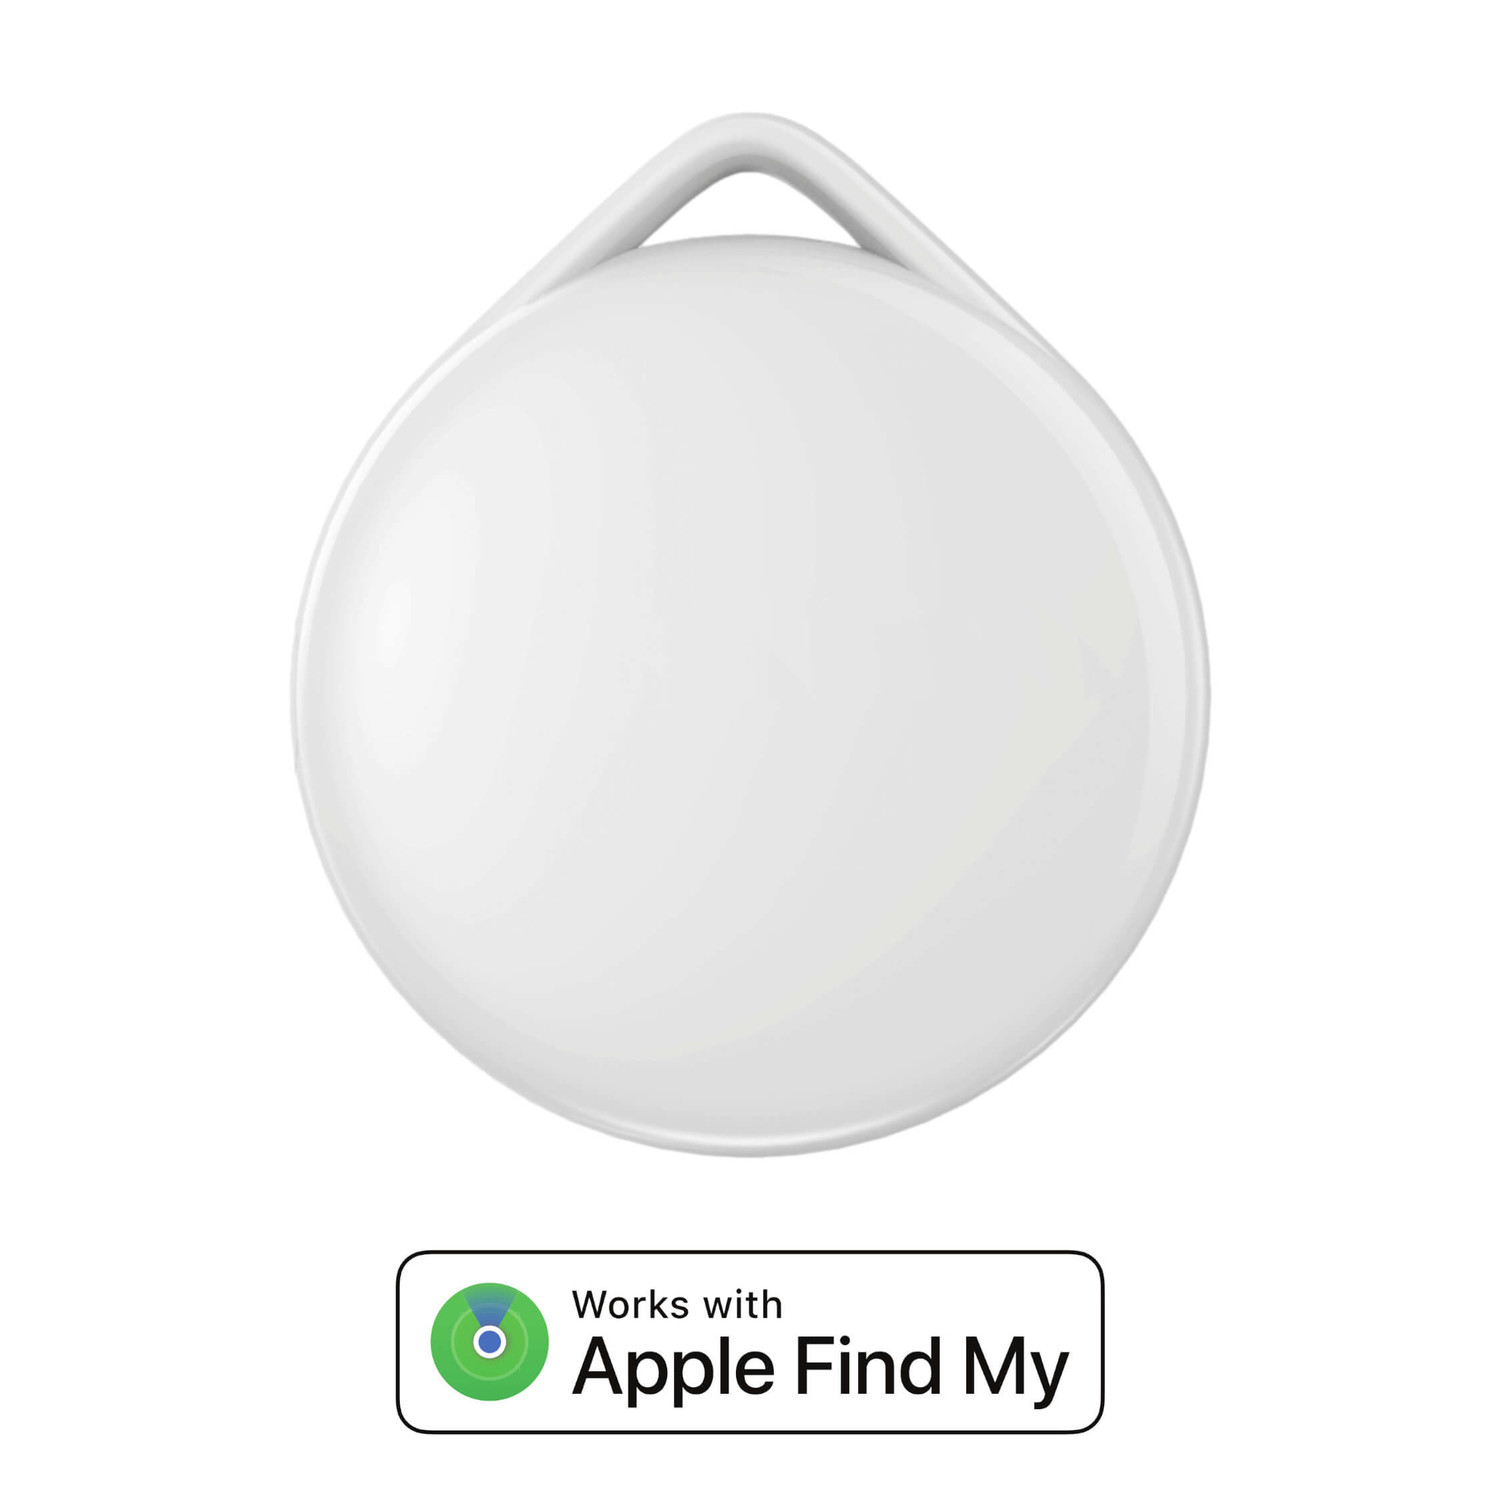 ARMODD iTag bílý bez loga (AirTag alternativa) s podporou Apple Find My (Najít)